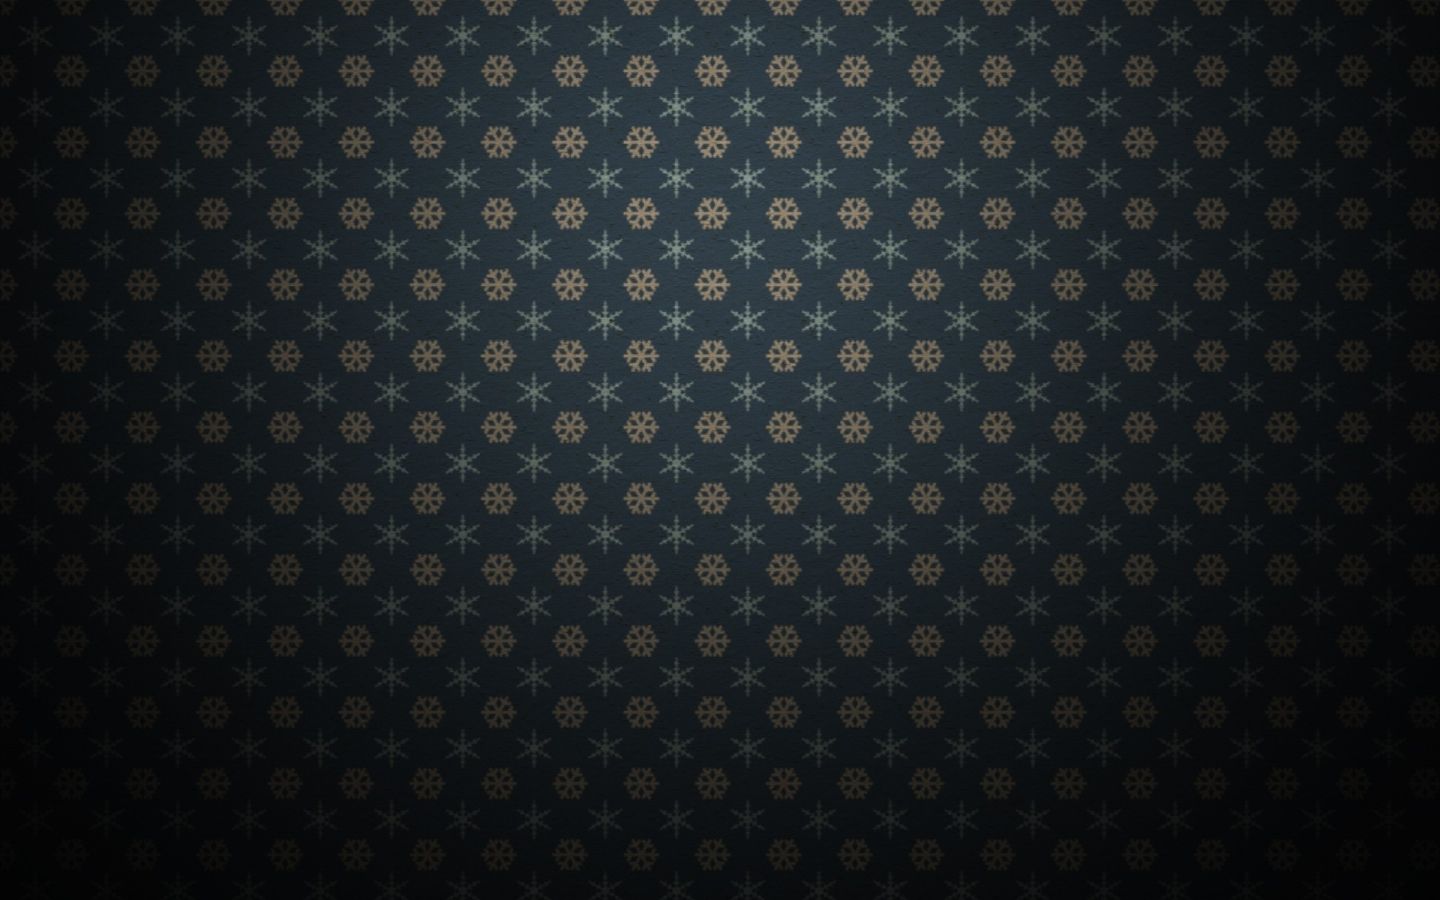 Minimalistic pattern background Mac Wallpaper Download Free Mac